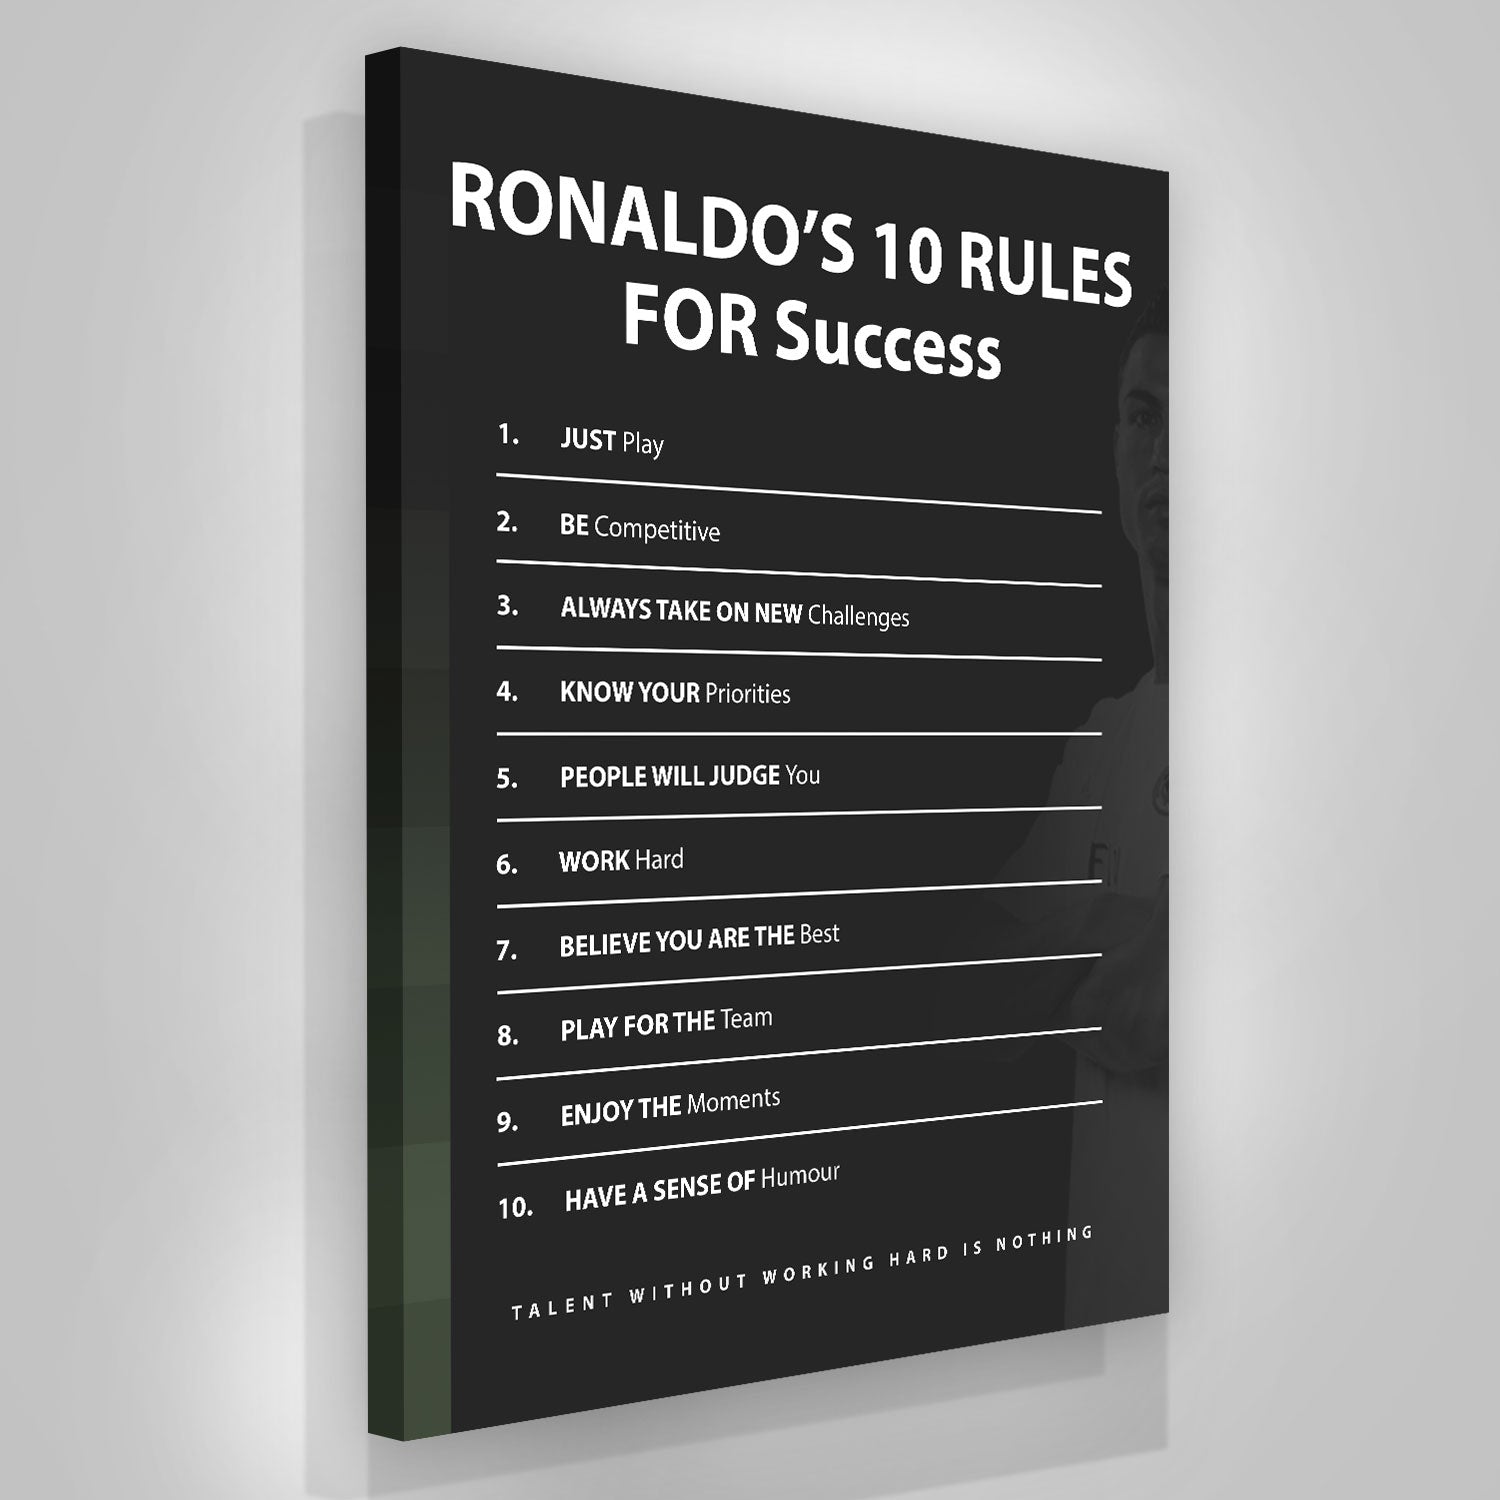 Cristiano Ronaldo's 10 Rules For Success